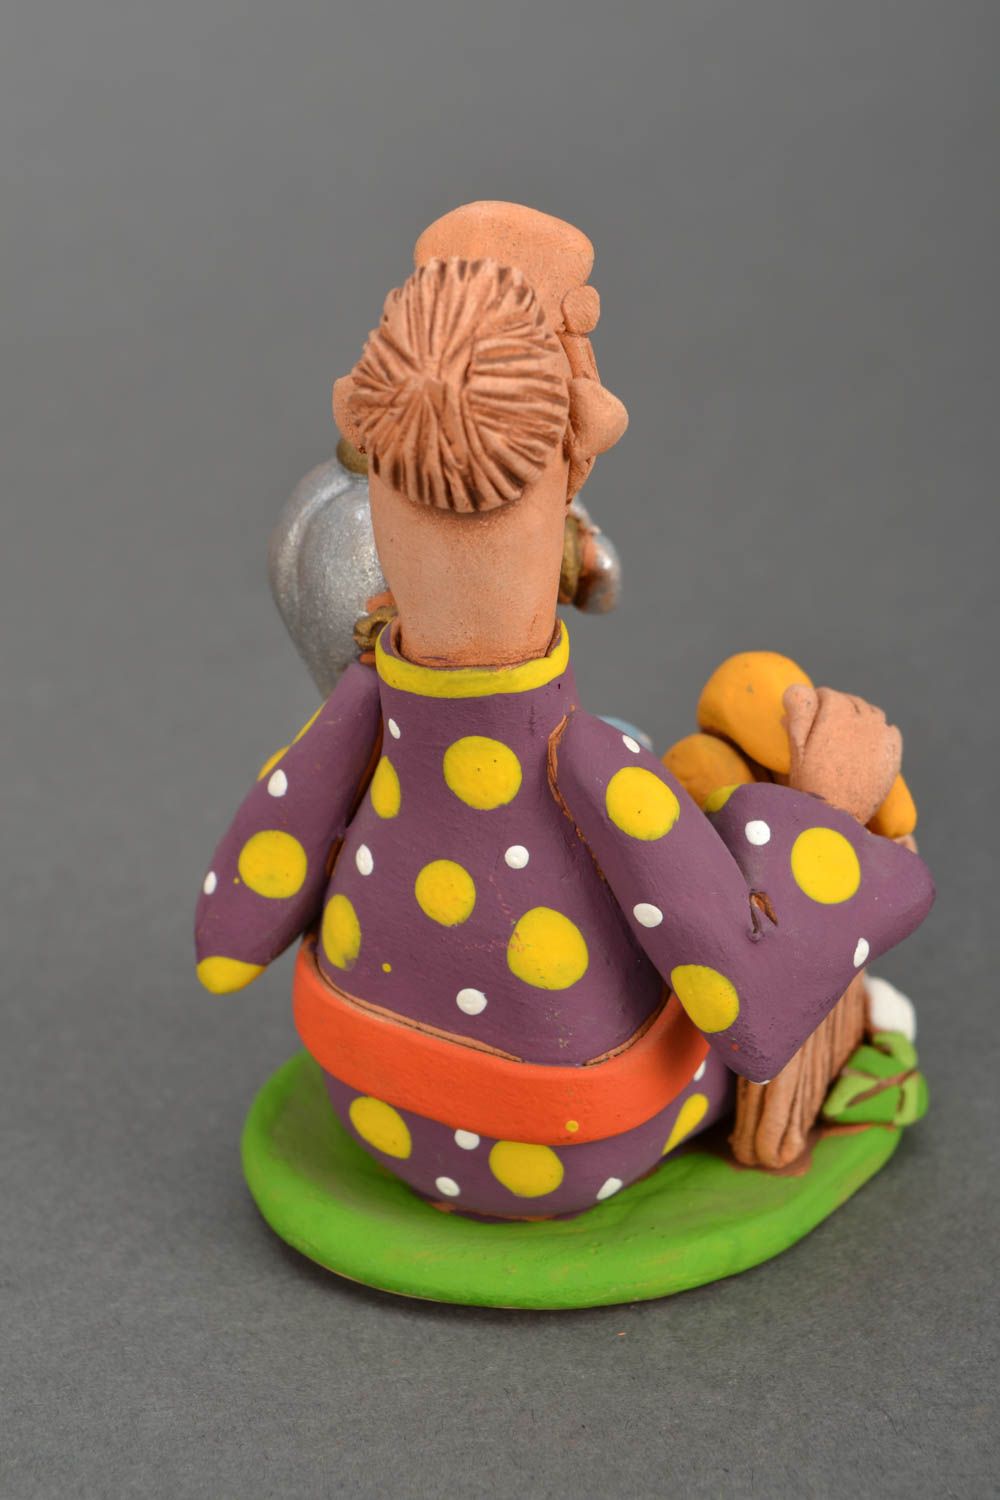 Statuina in ceramica fatta a mano figurina divertente souvenir originale foto 5